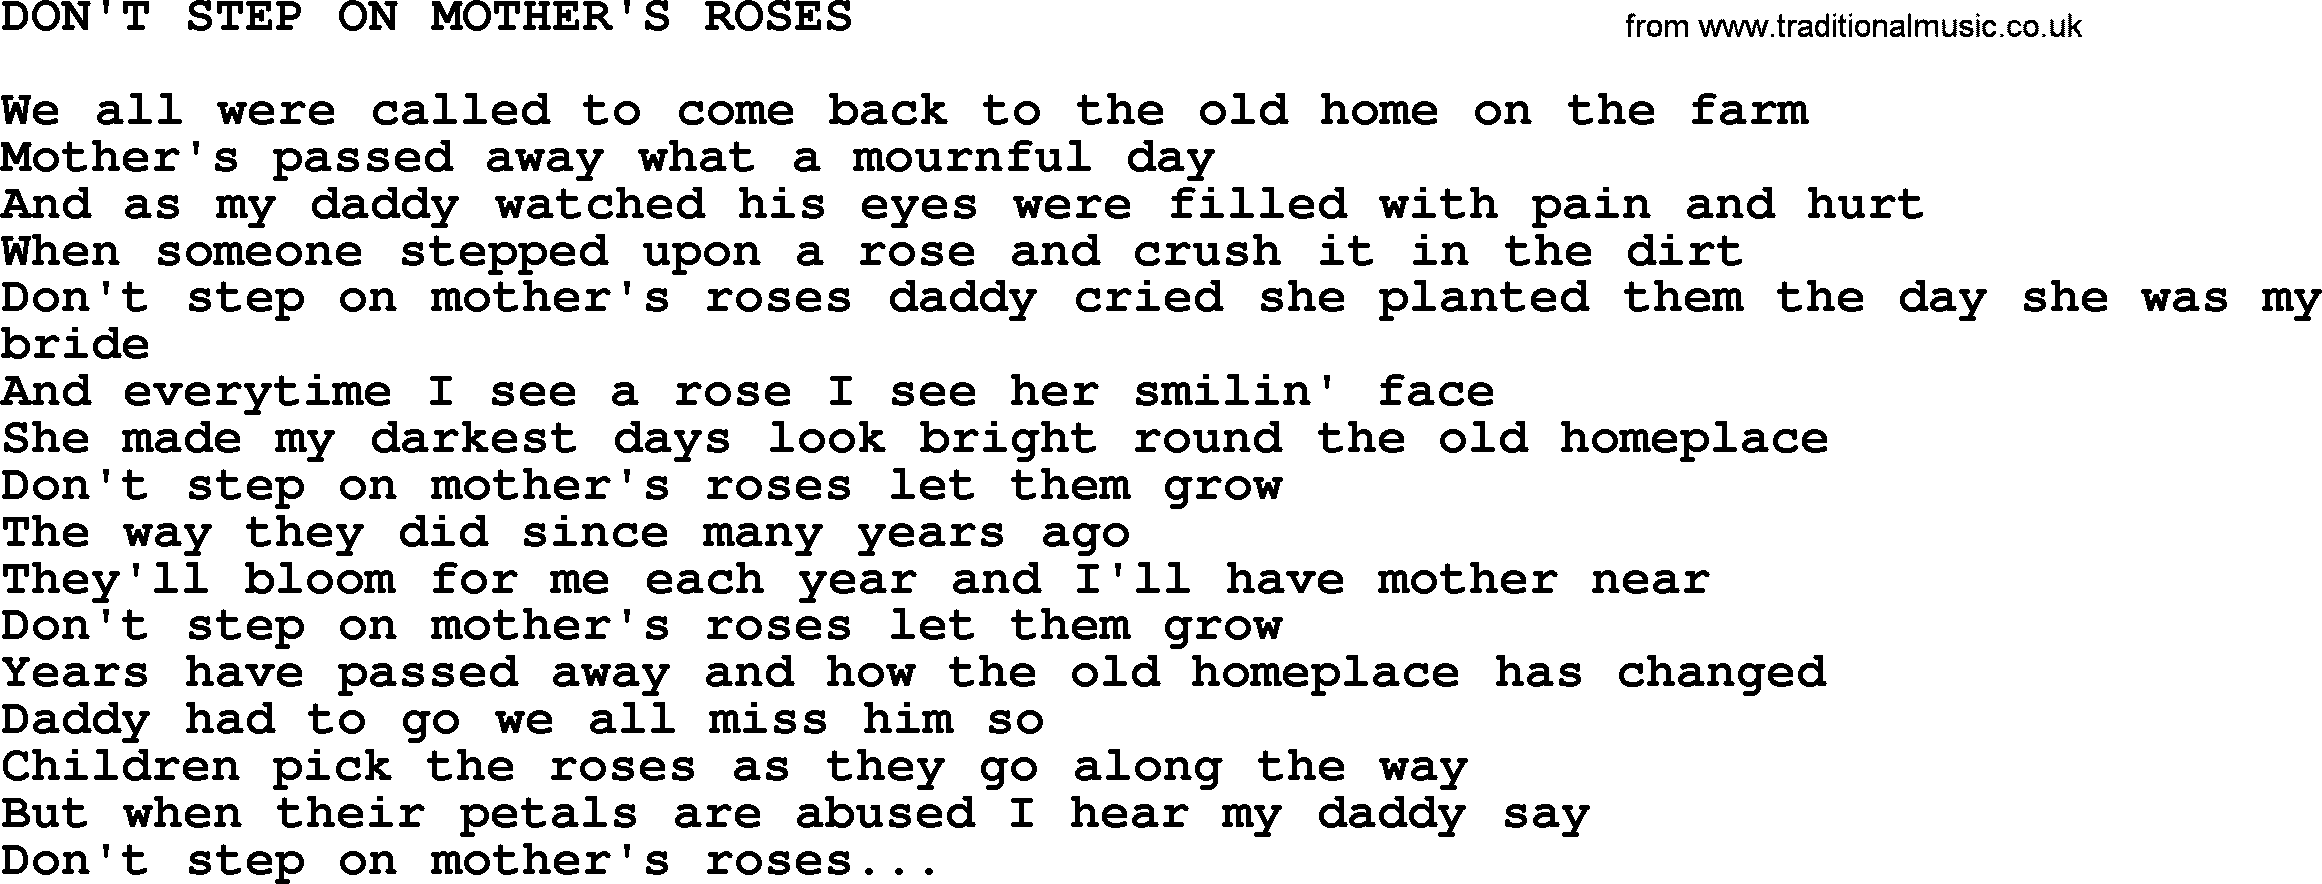 Johnny Cash song Don't Step On Mother's Roses.txt lyrics